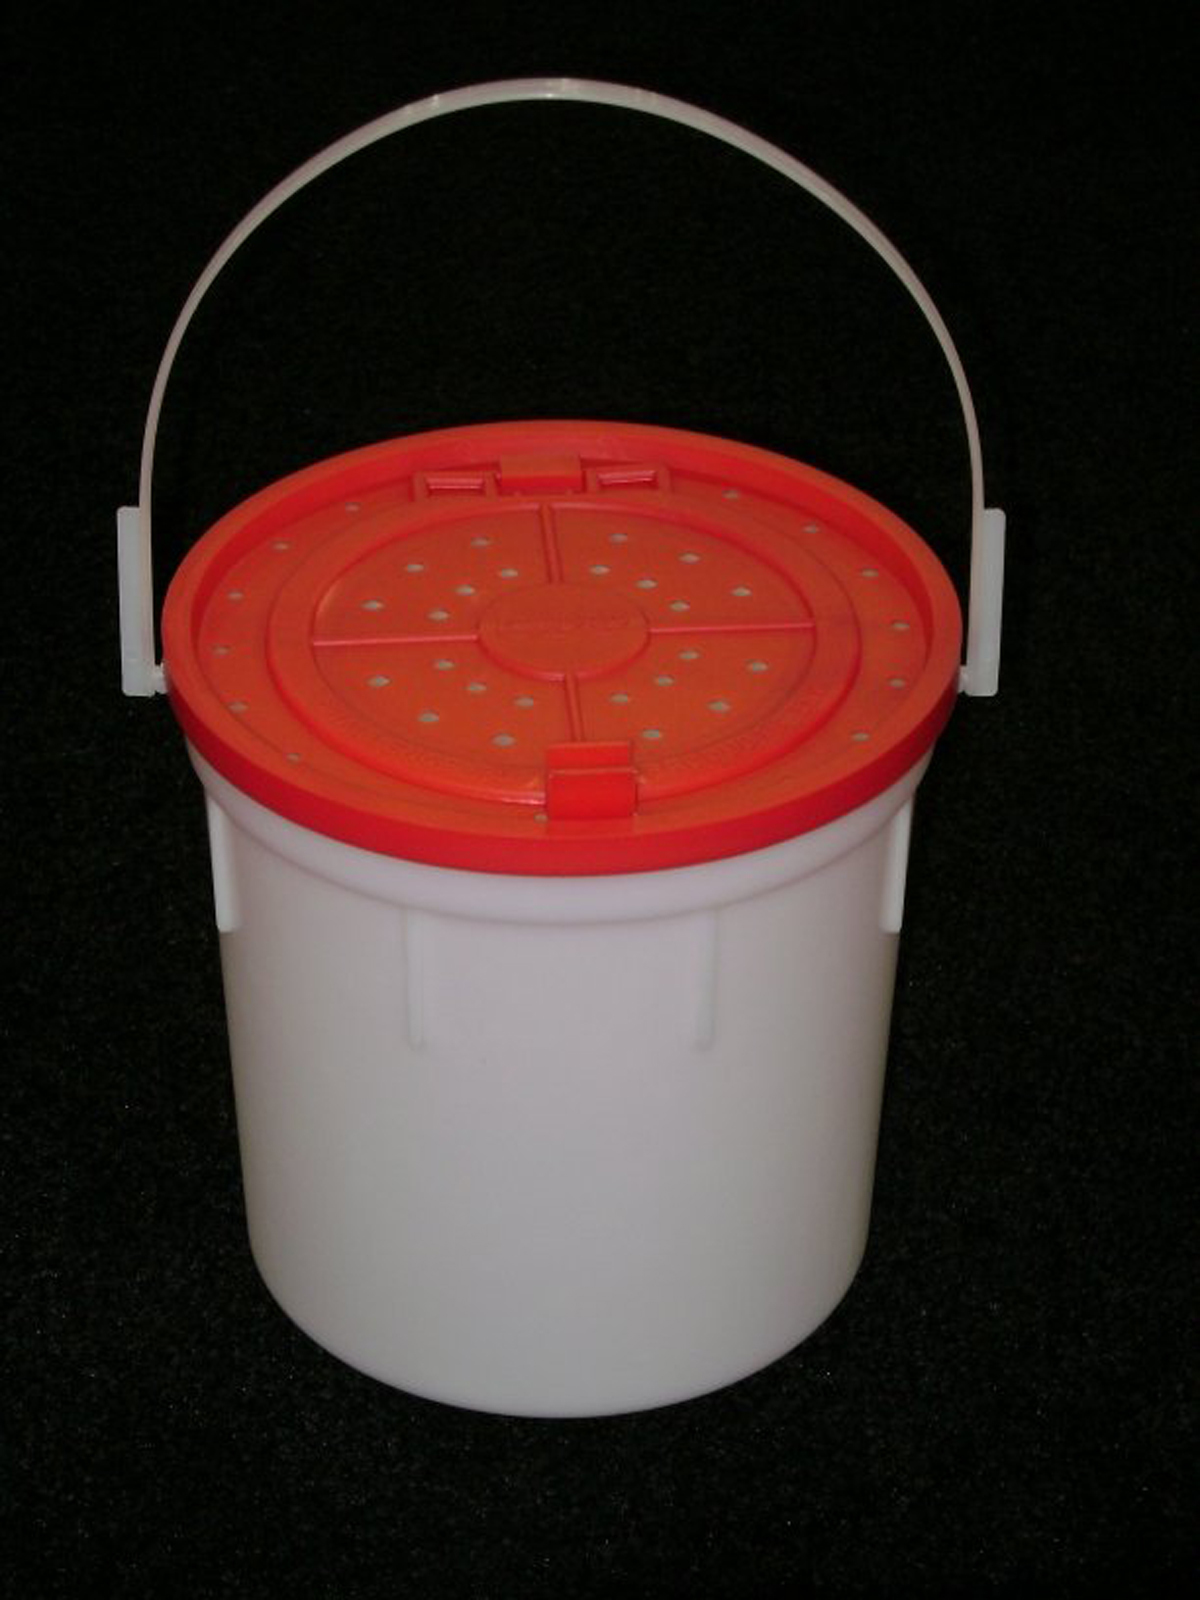 Challenge Plastics Bait Bucket with Lid , Up to 17% Off — CampSaver